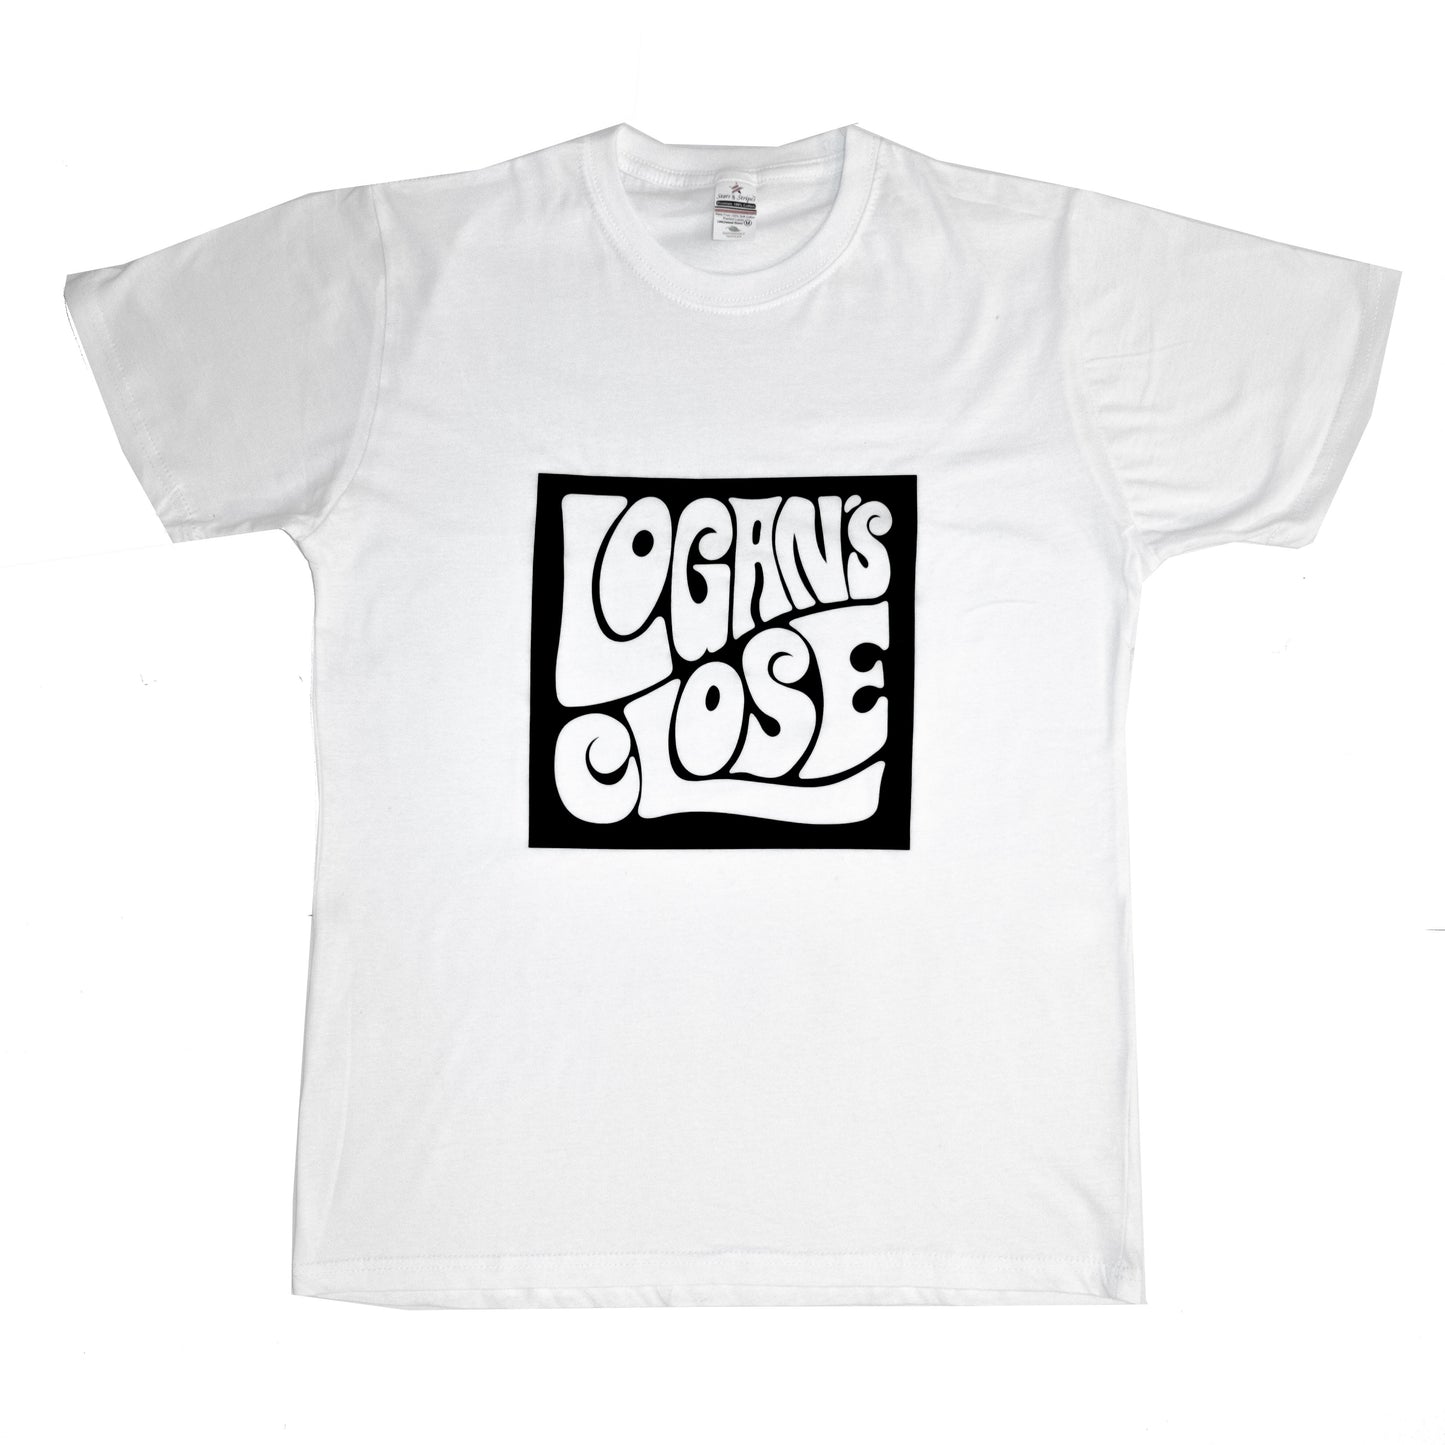 Logan's Close Logo T-Shirt – Weiß/Schwarz